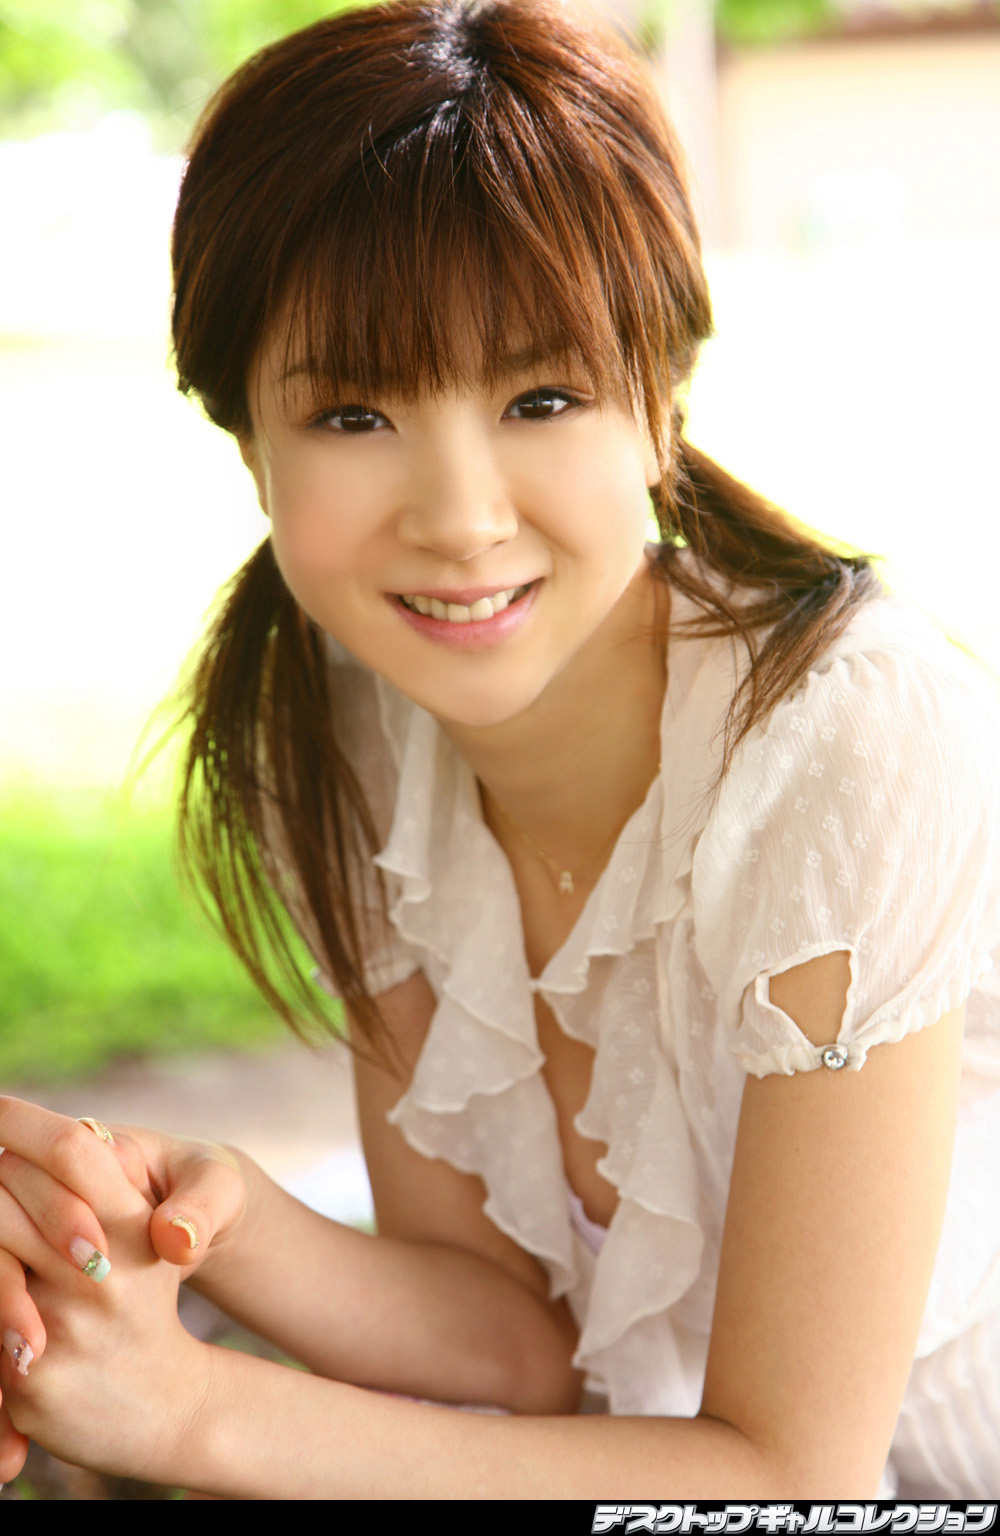 Girls Photos From Asia: Aki Hoshino, Sexy Japanese Idol 